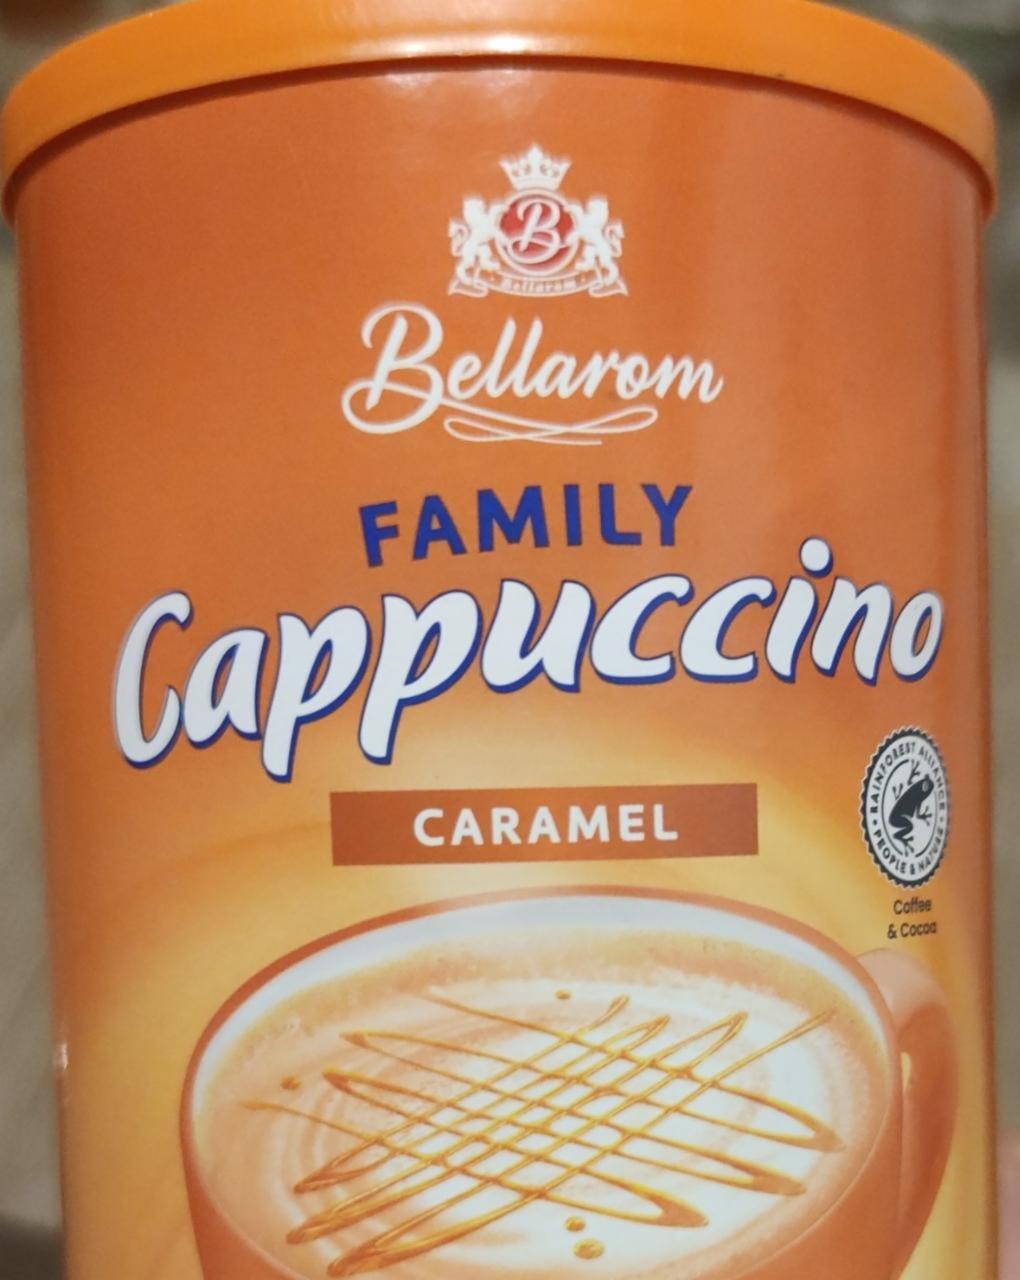 Fotografie - Family Cappuccino Caramel Bellarom